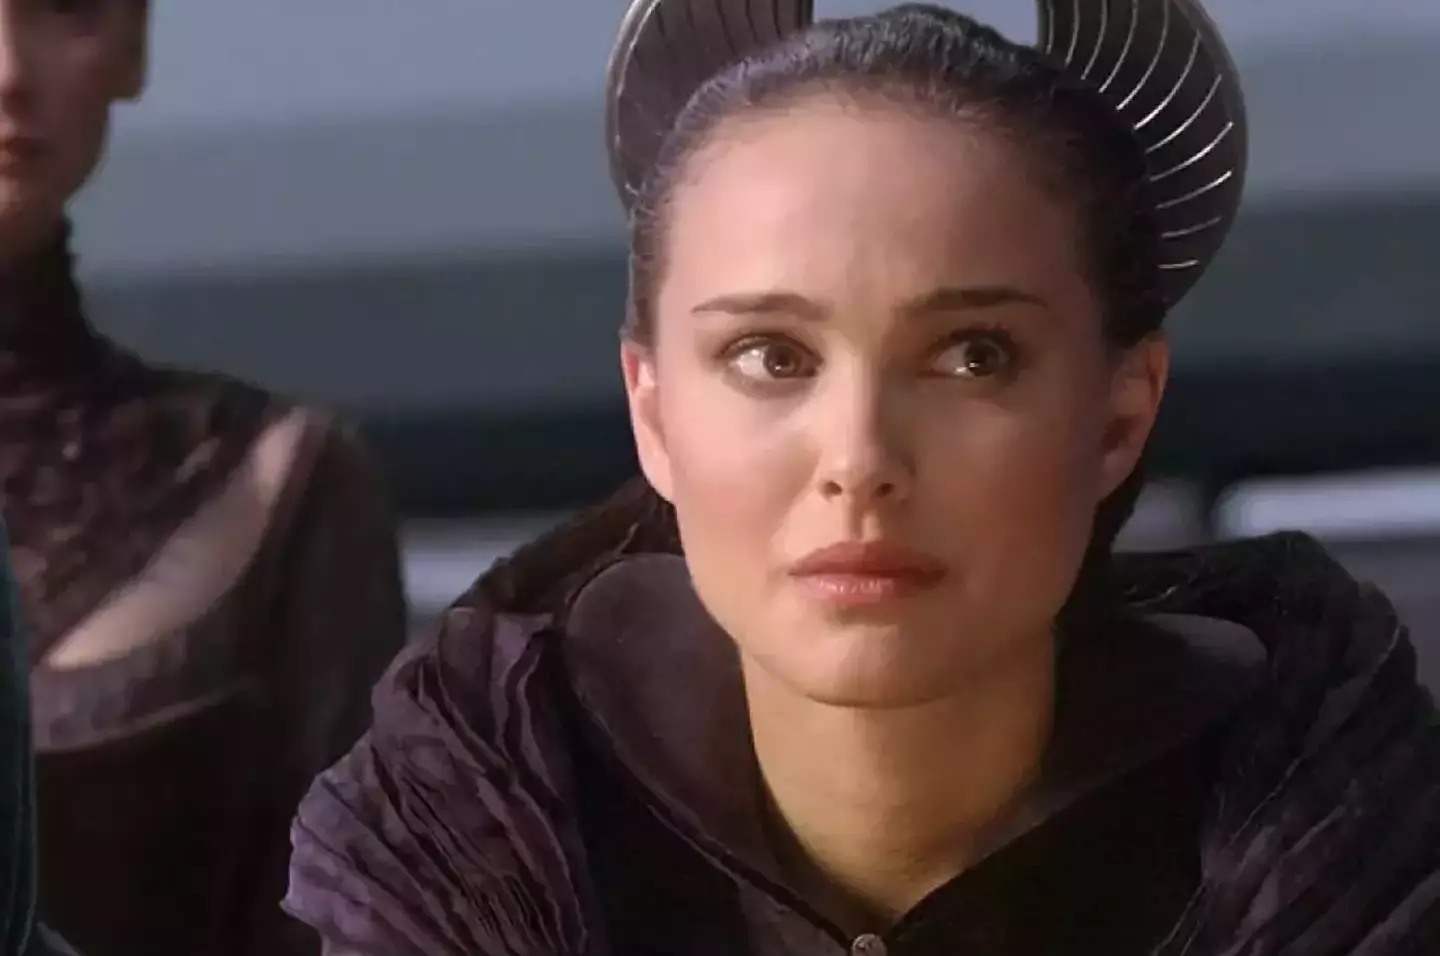 Natalie Portman as Padmé Amidala in the sequel trilogy.